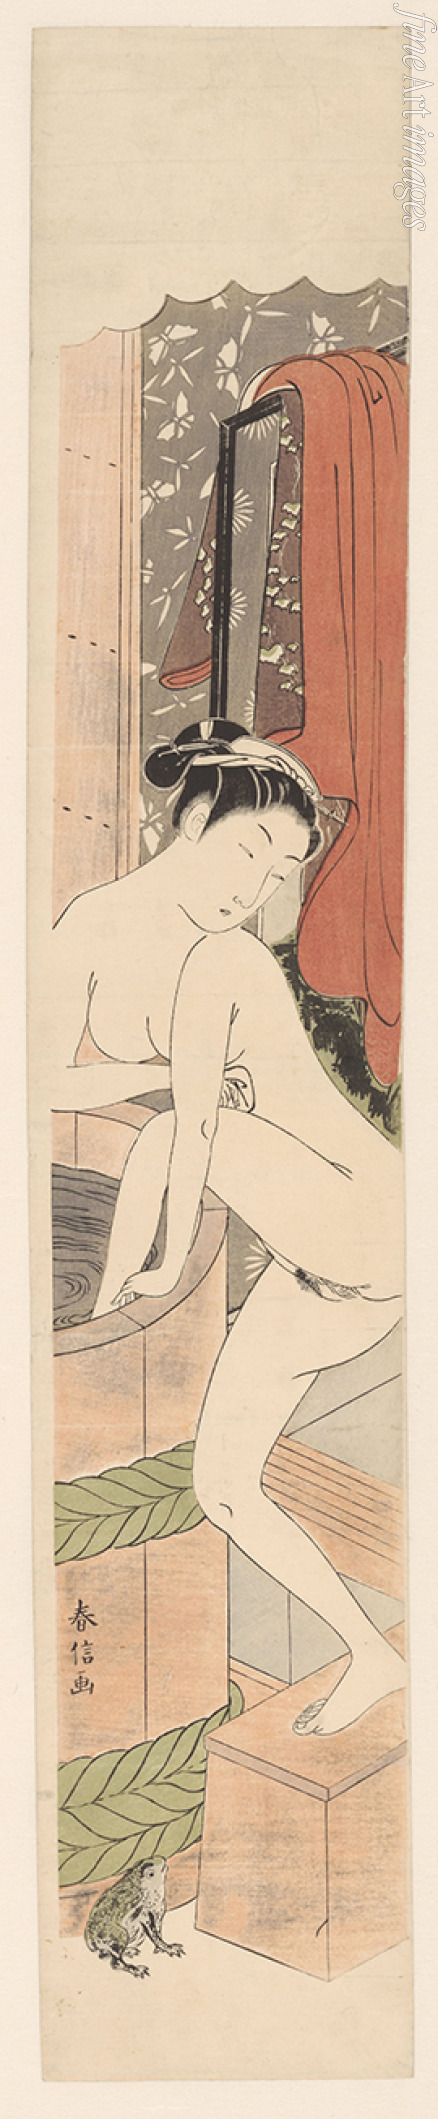 Harunobu Suzuki - A Woman bathing